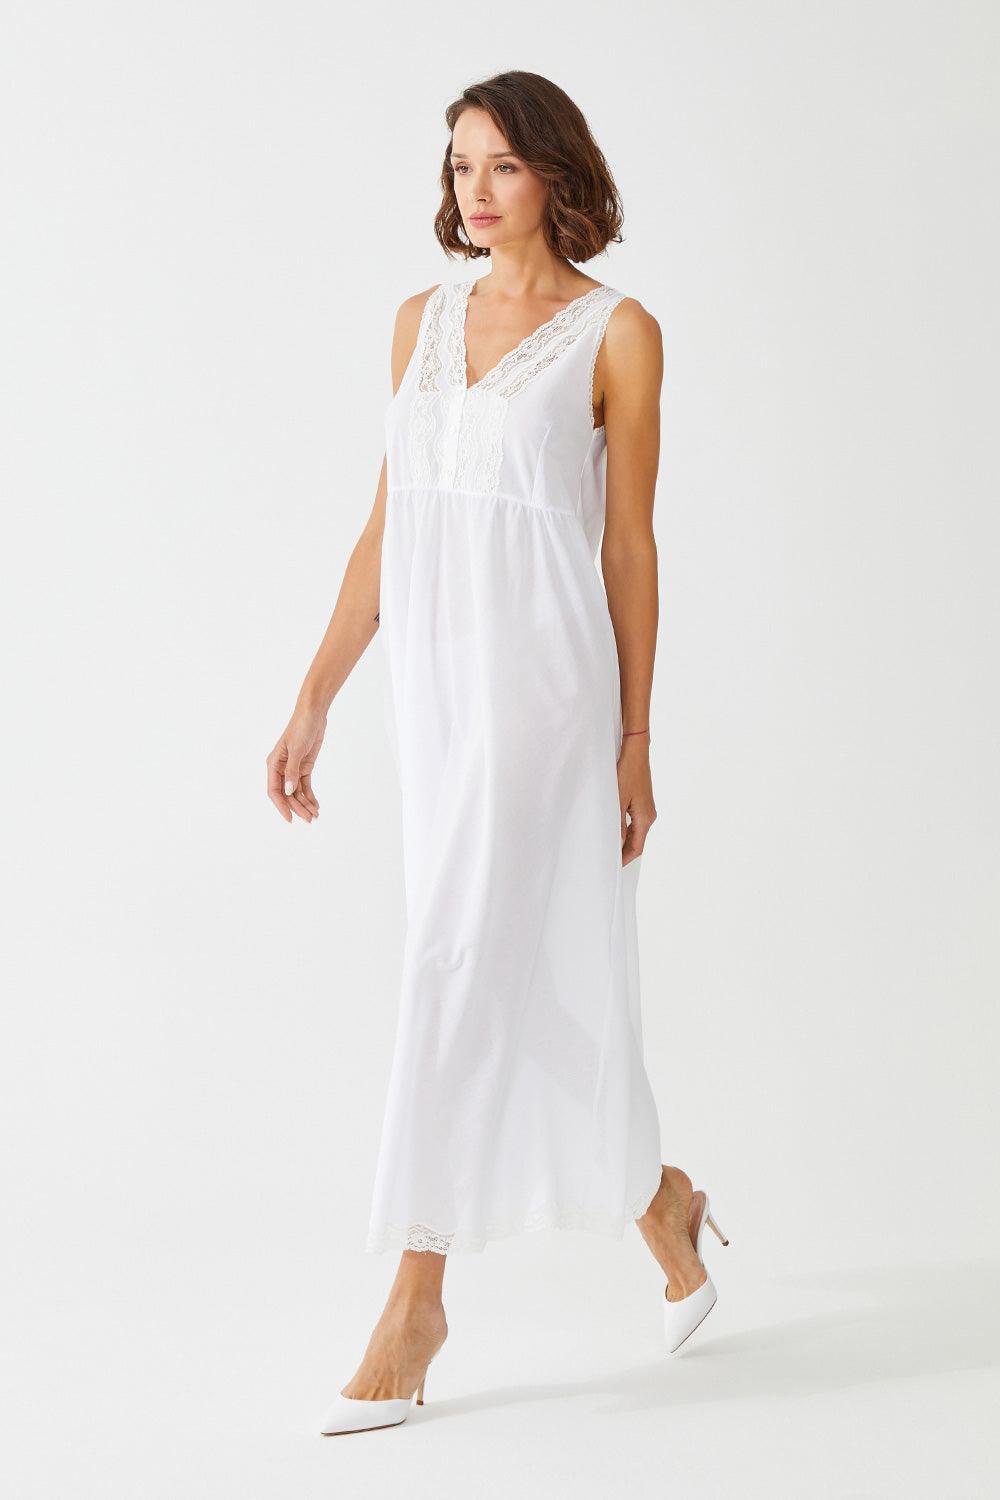 Mina Long Cotton Voile Sleeveless Inner Nightgown - Off White - Bocan